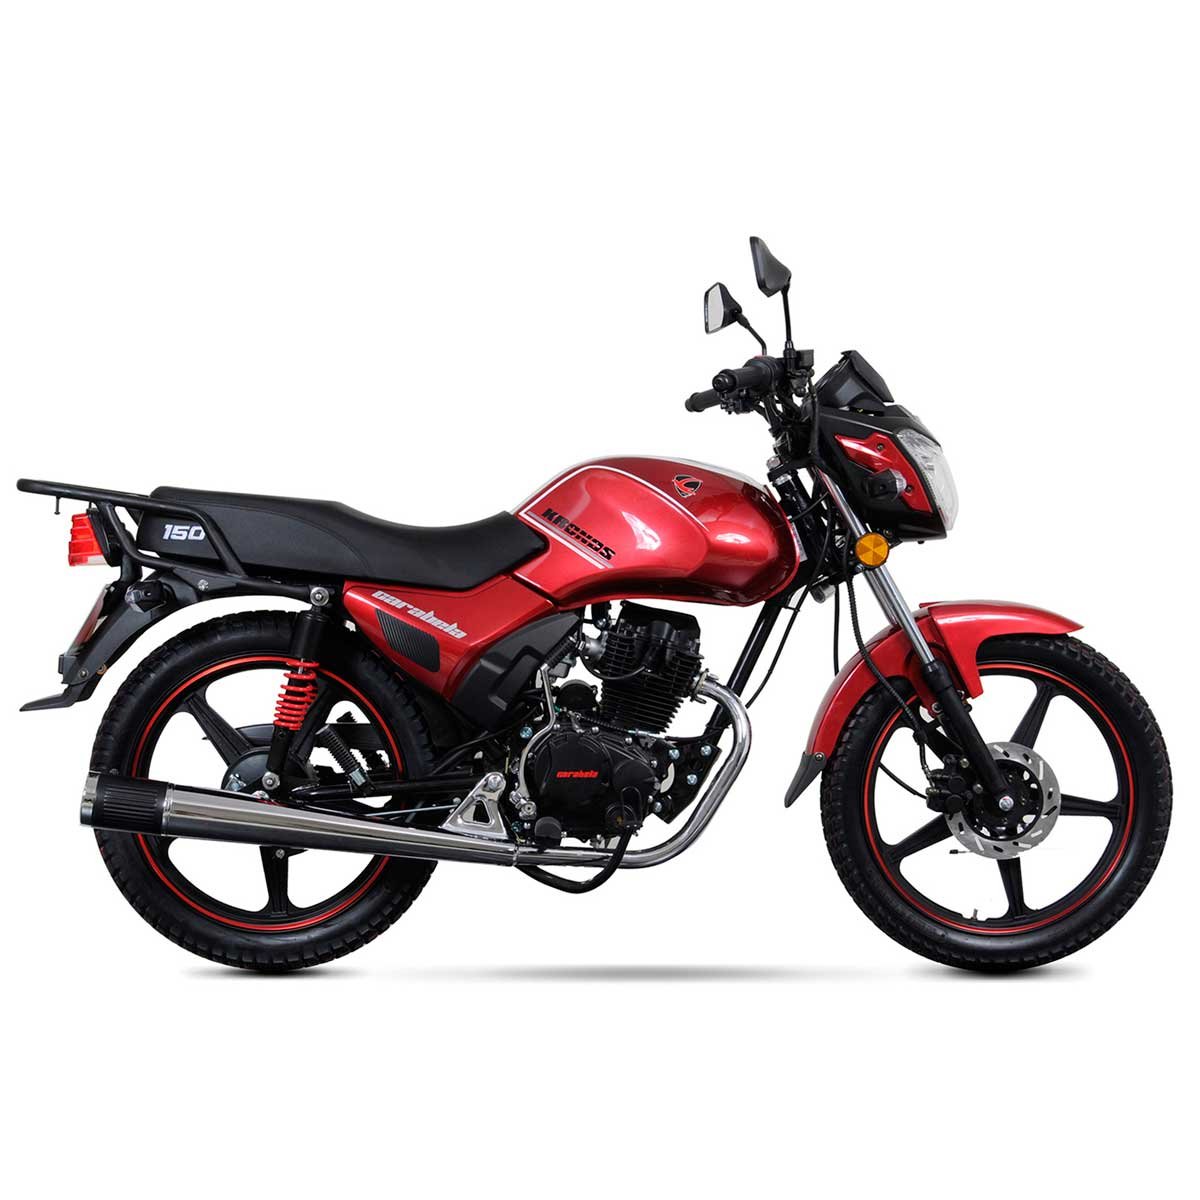 Motocicleta Kronos Roja 2020 Carabela